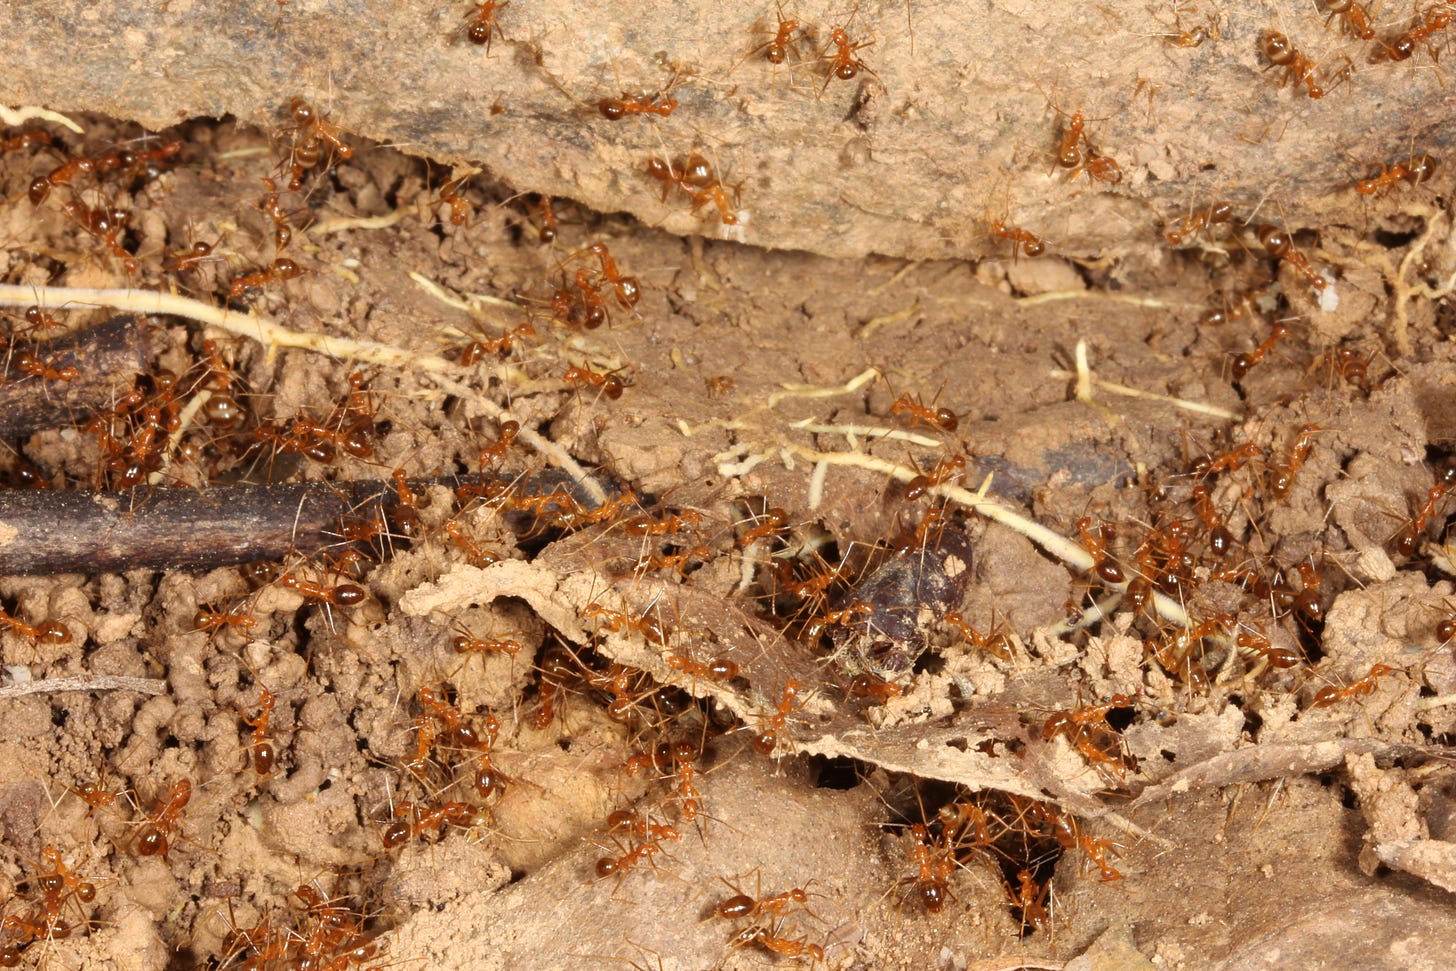 Yellow Crazy Ant (YCA) Swarm nest
Photographer: Conrad Hoskin